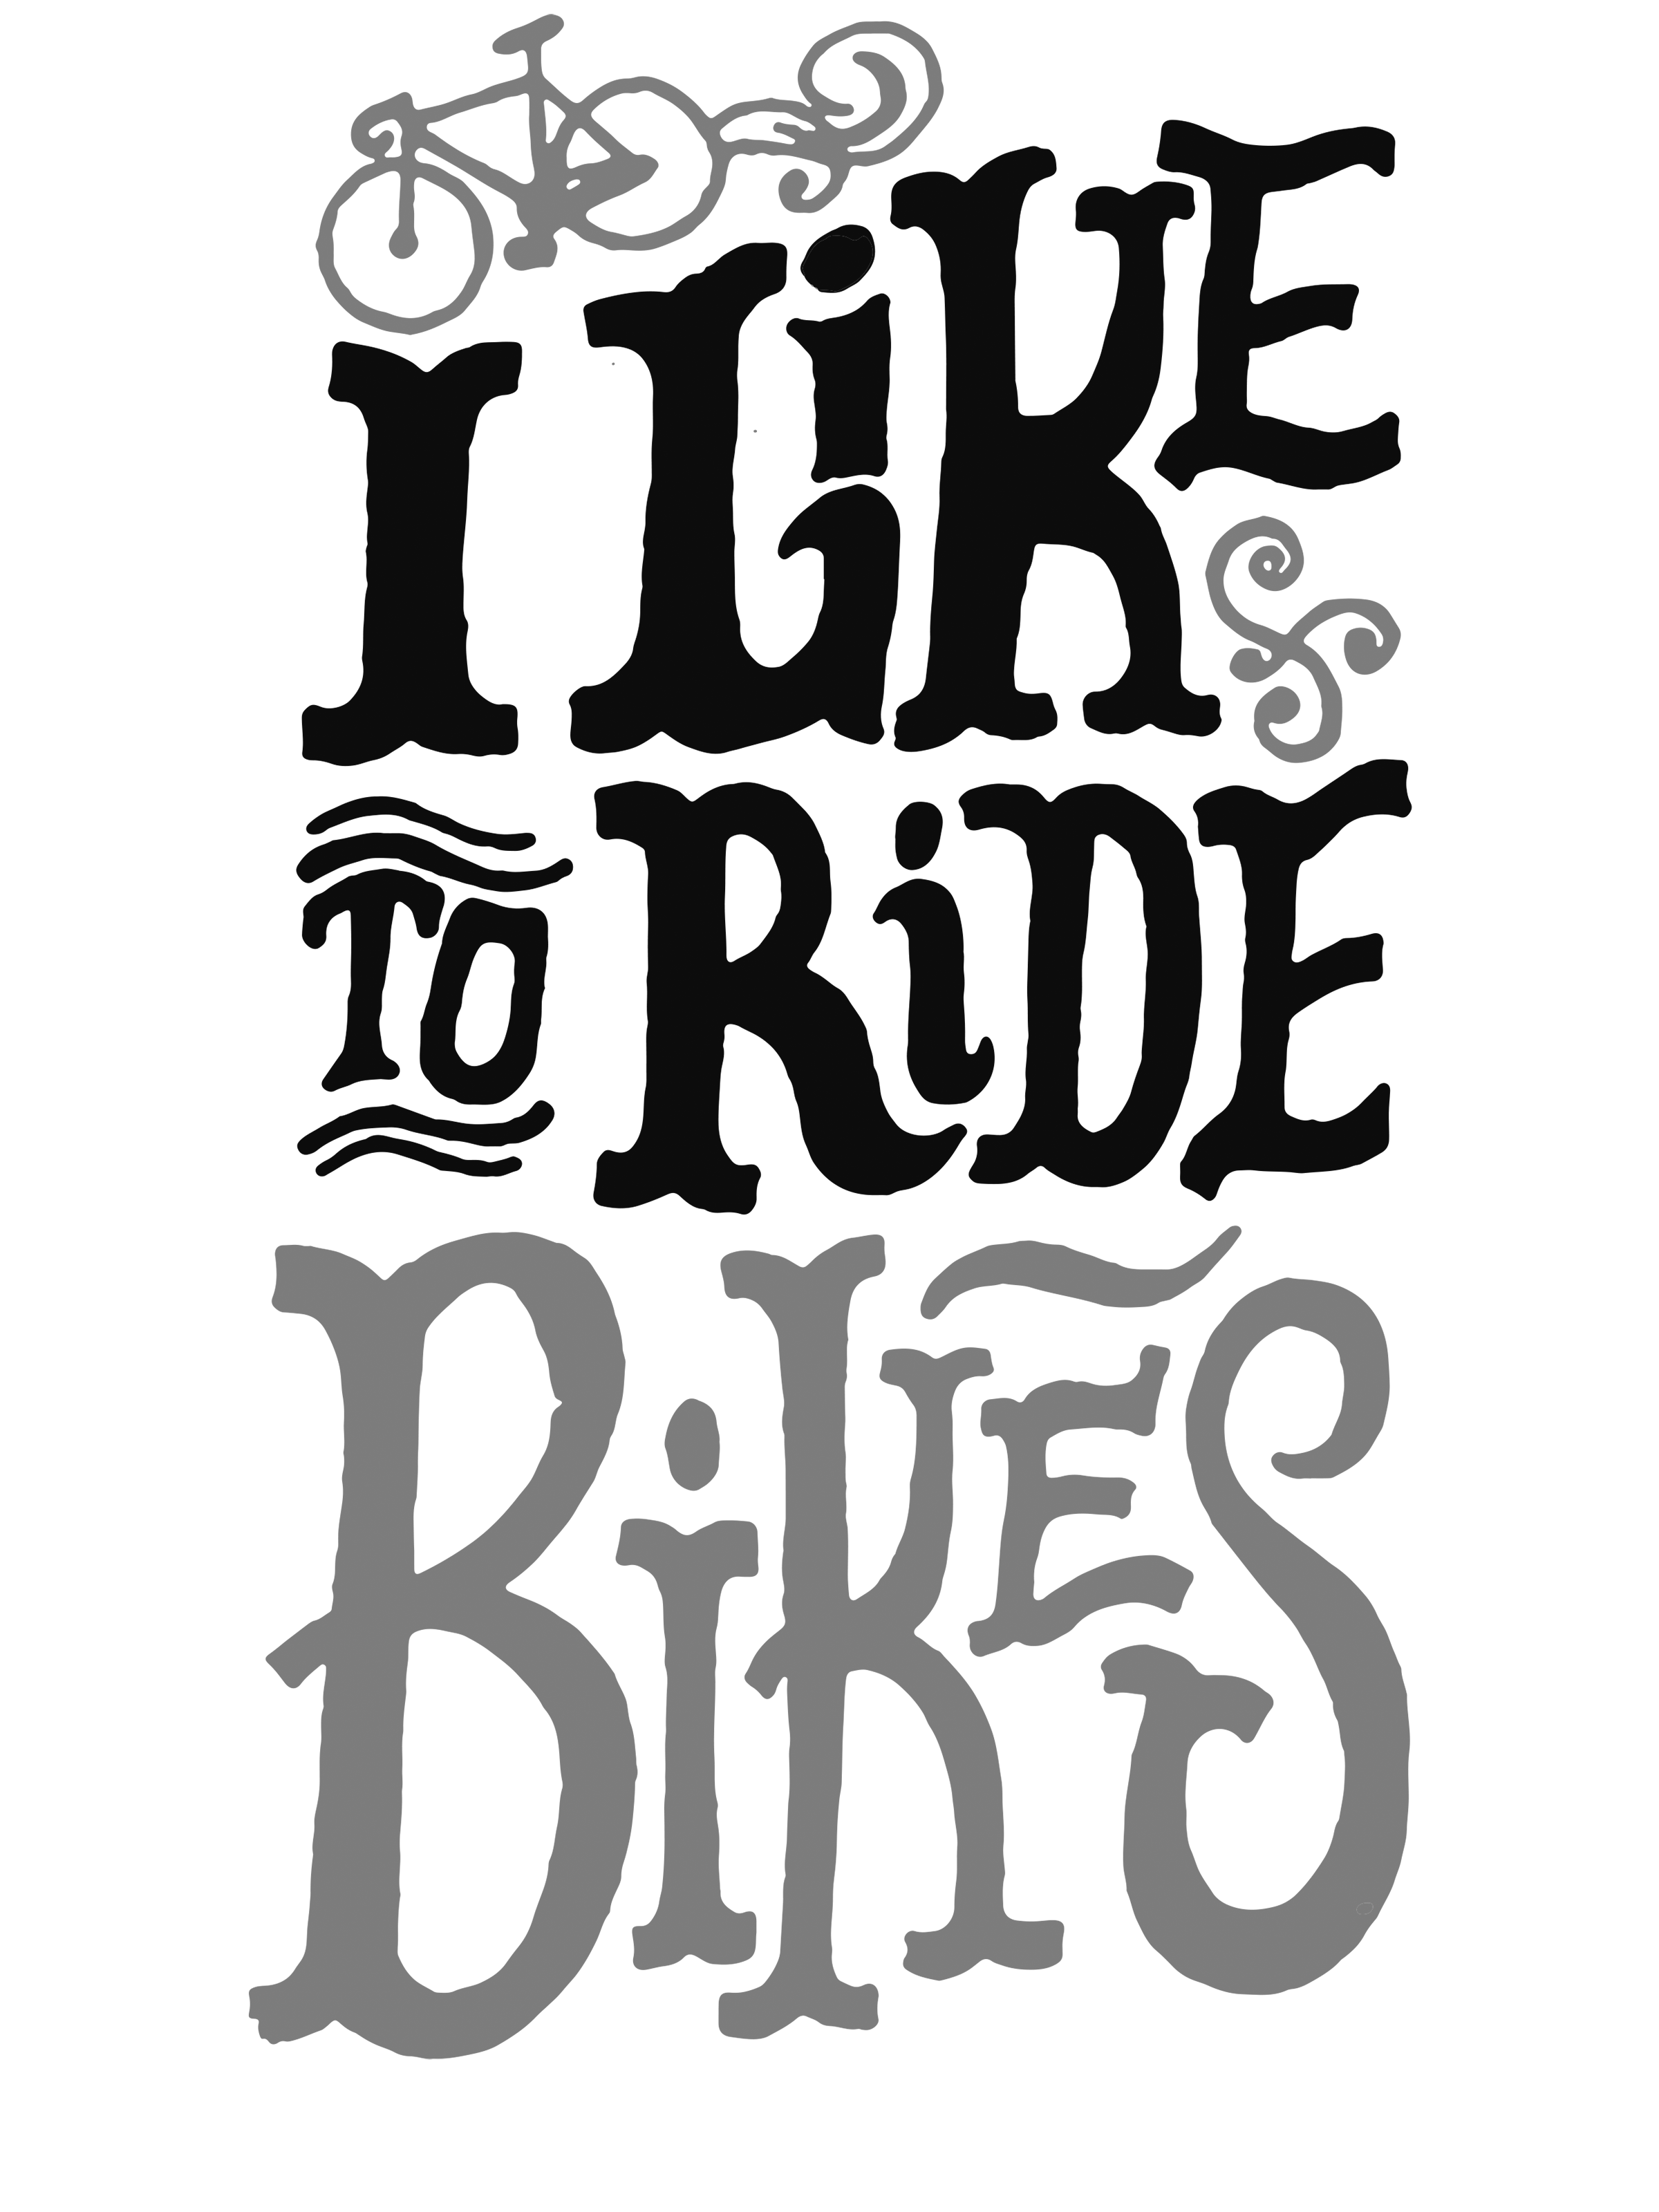 0343 – I Like To Ride Bikes